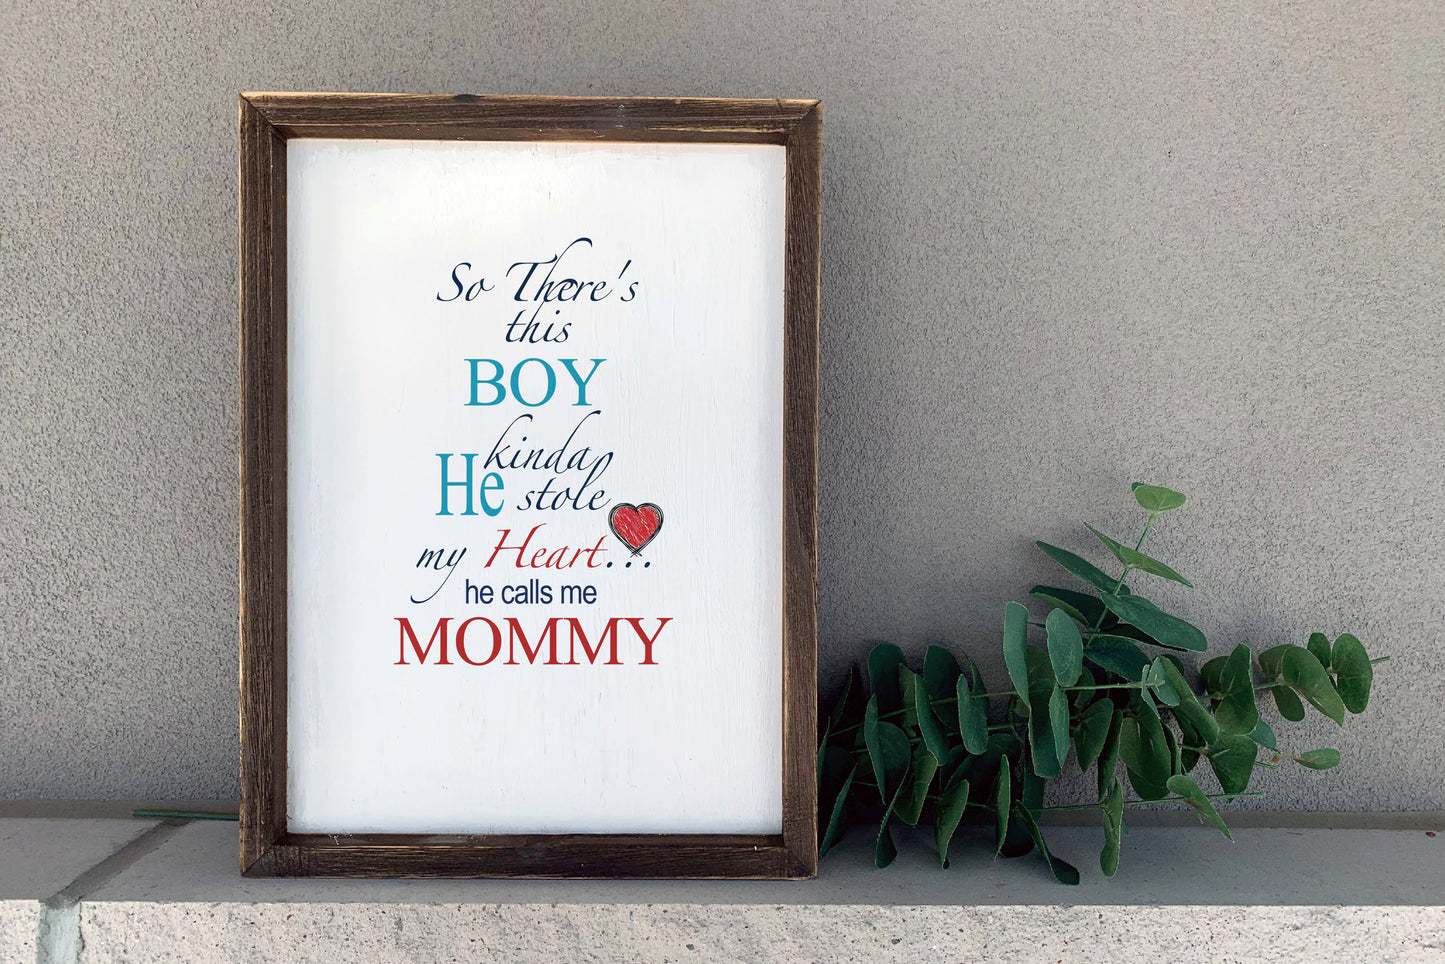 Great Moms and Happy Kids Printable- DIGITAL FILE